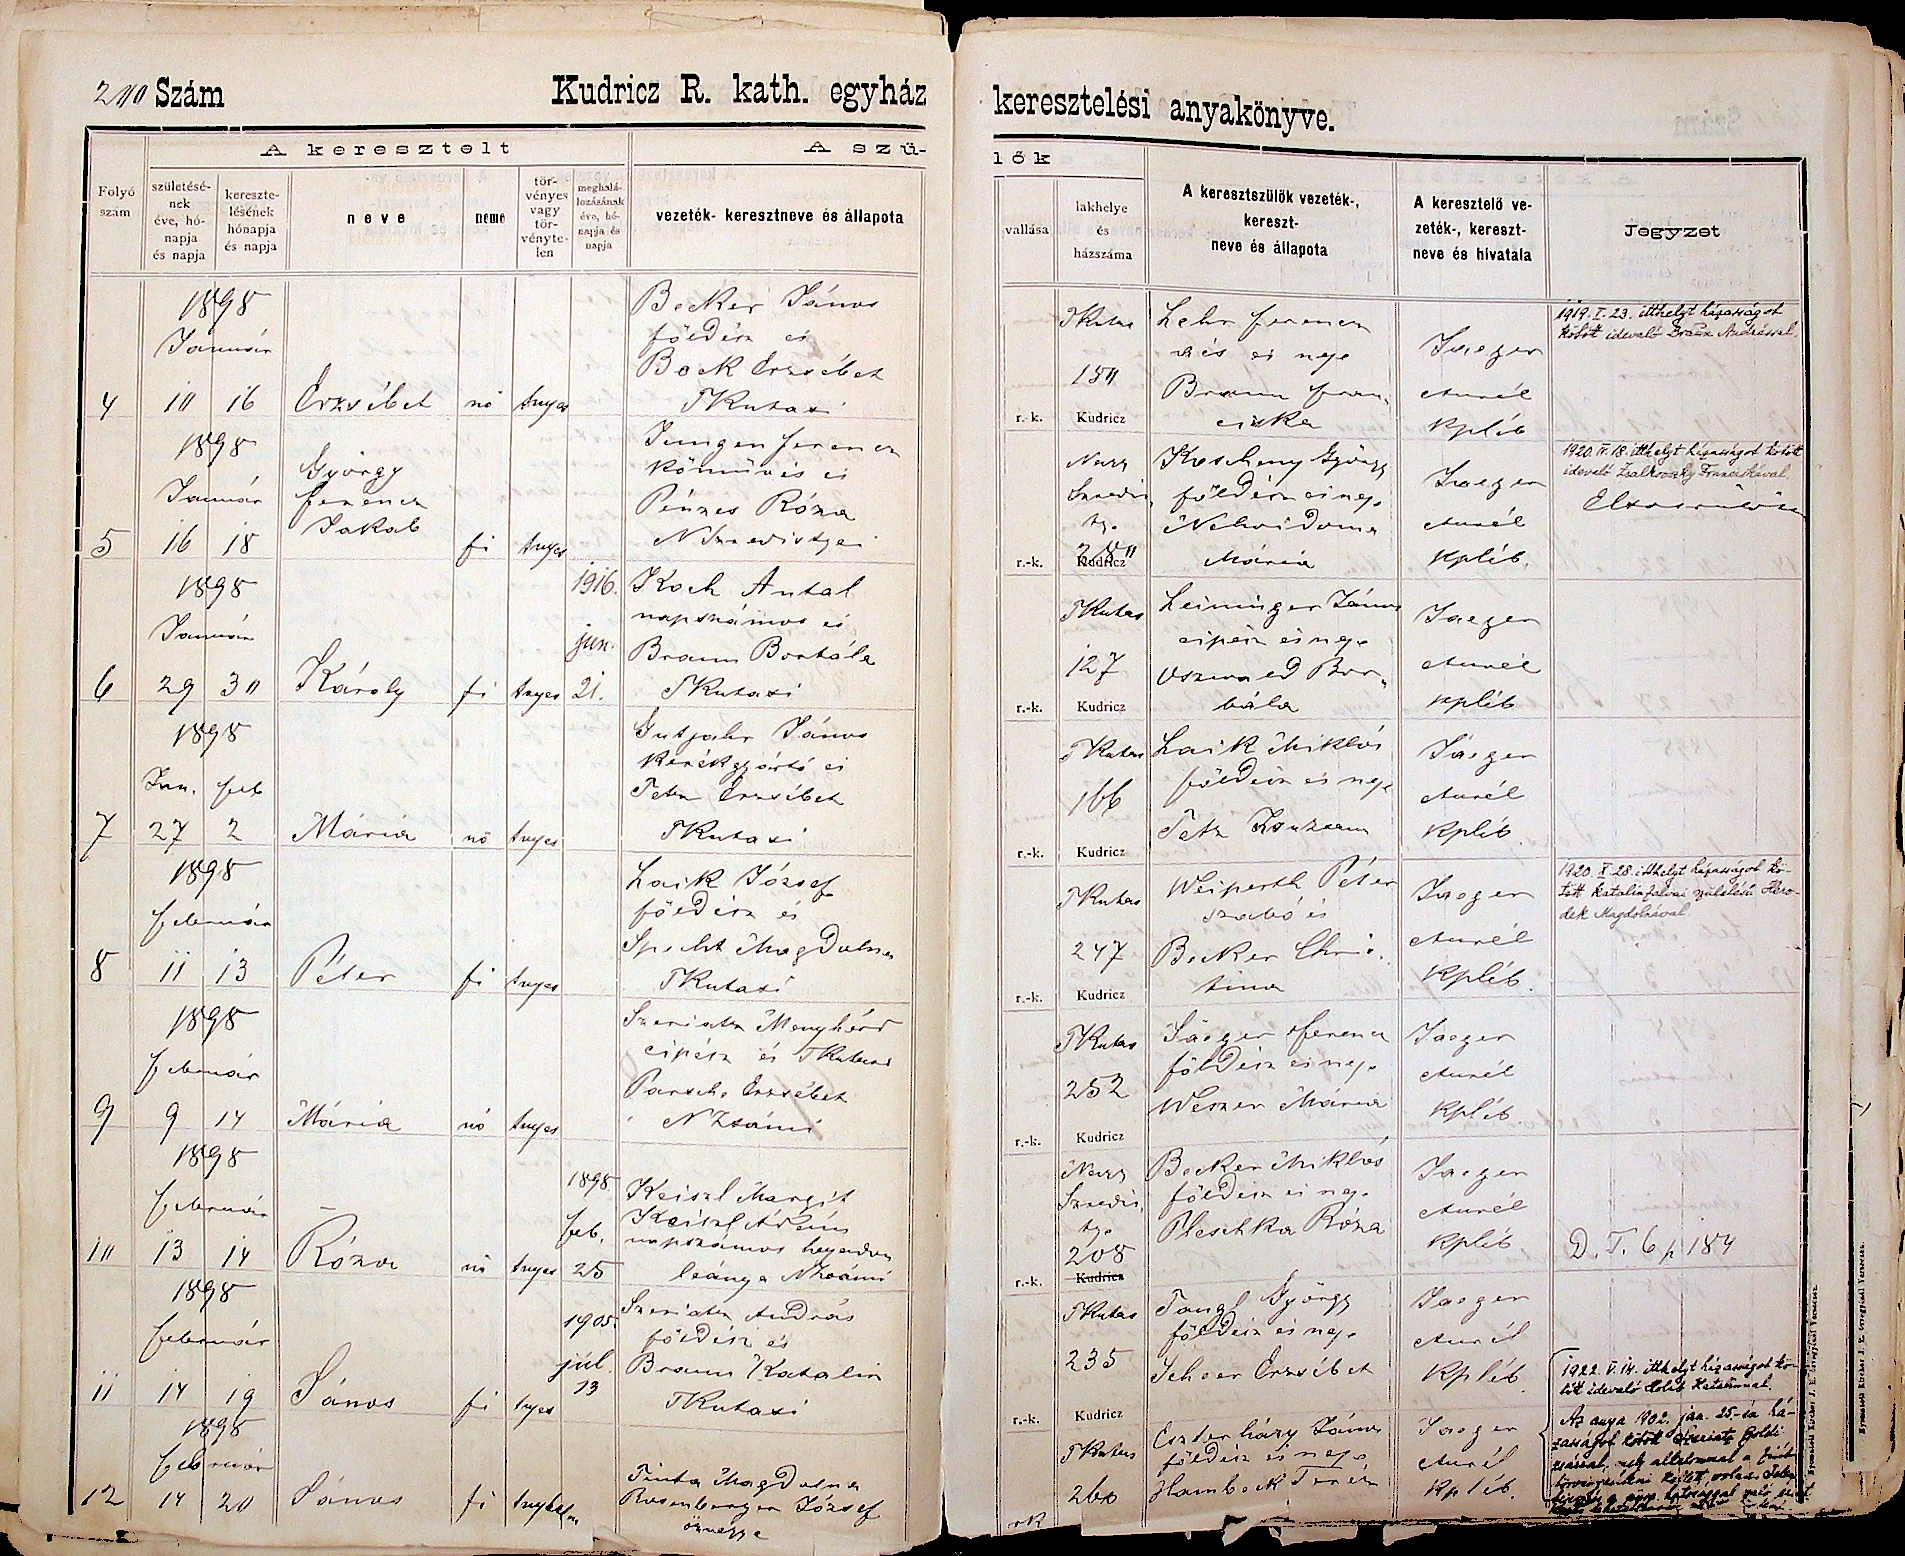 images/church_records/BIRTHS/1884-1899B/1898/200